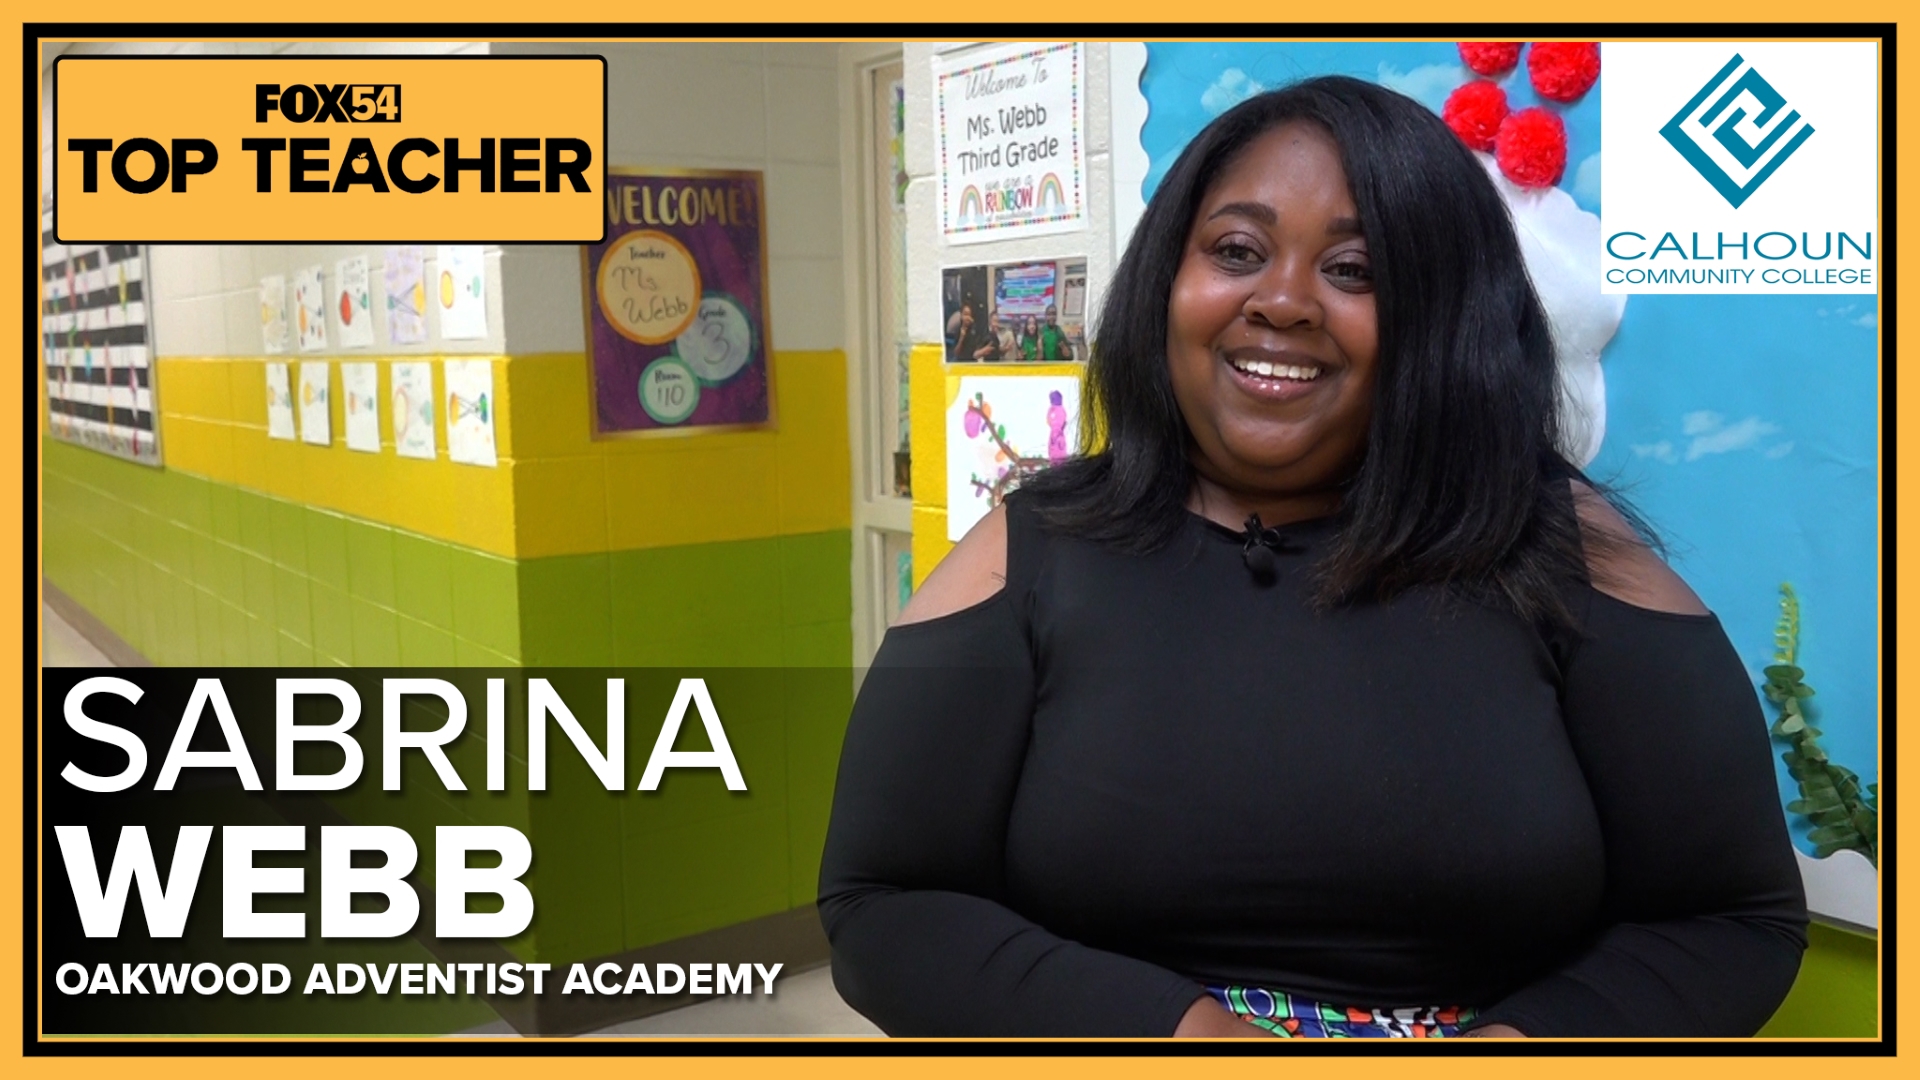 FOX54 Top Teacher Sabrina Webb Web Extra